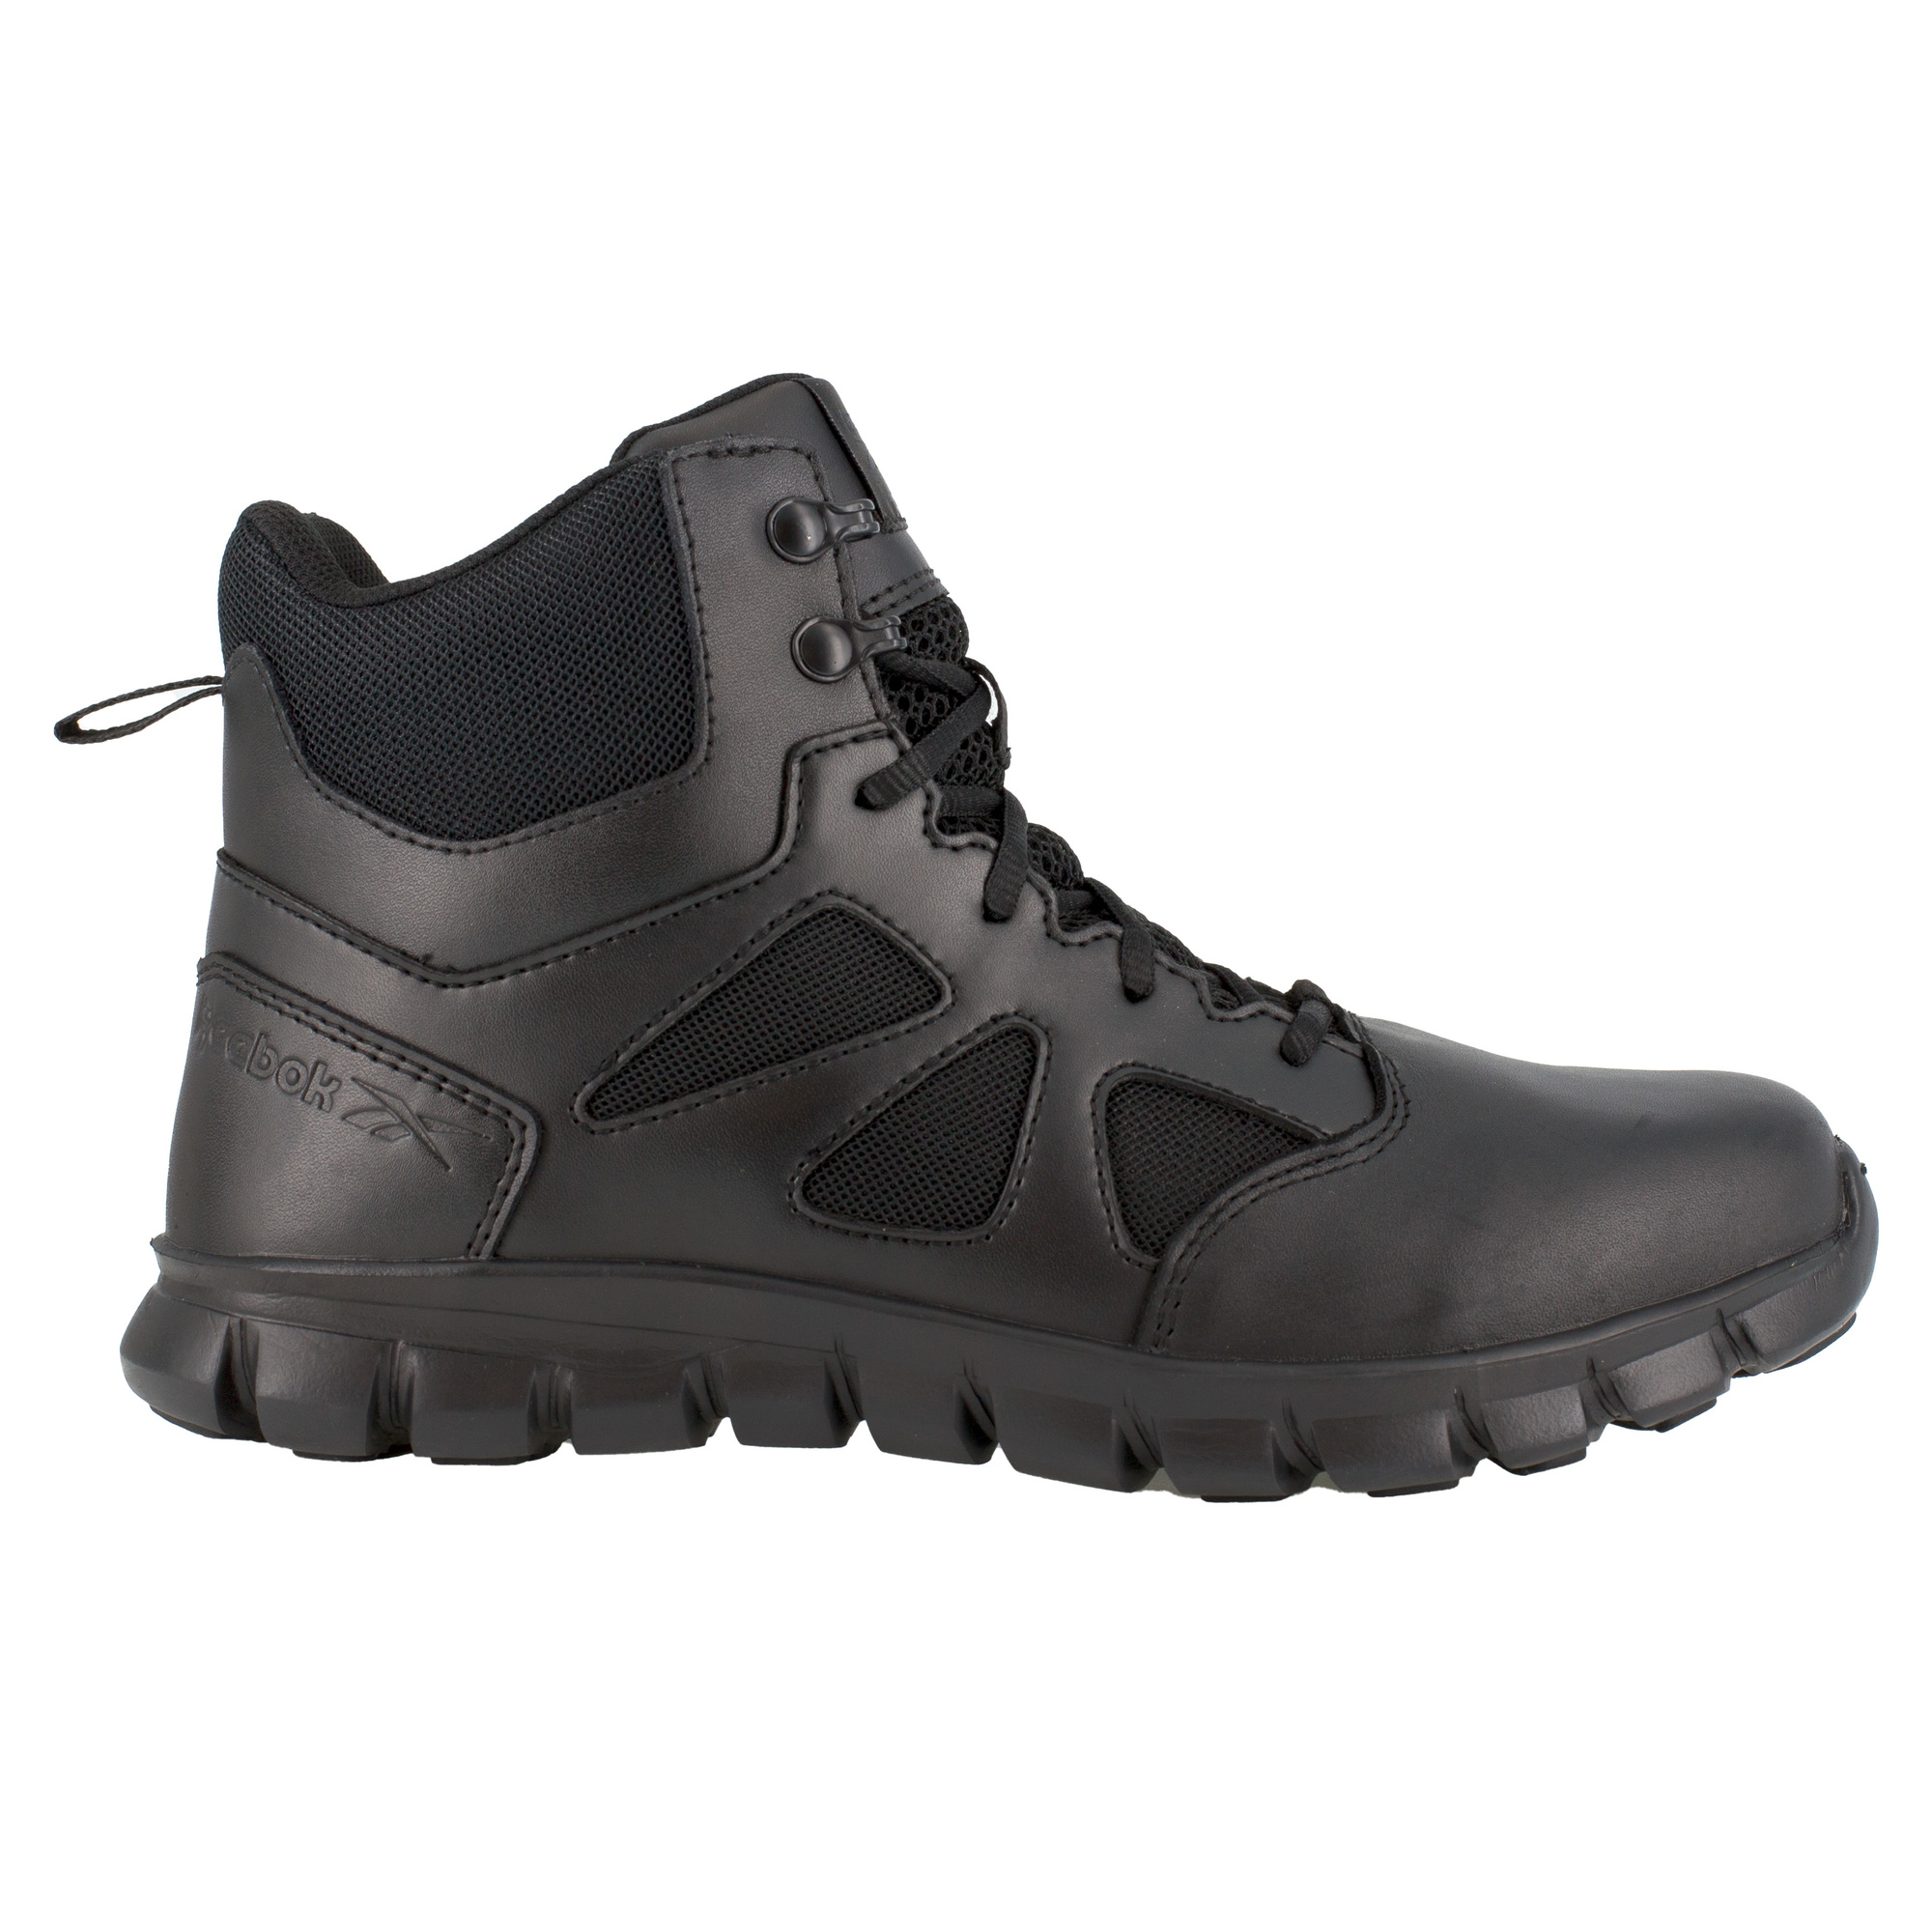 Reebok, 6Inch Tactical Boot w/Side Zipper, Size 12, Width Wide, Color Black, Model RB086